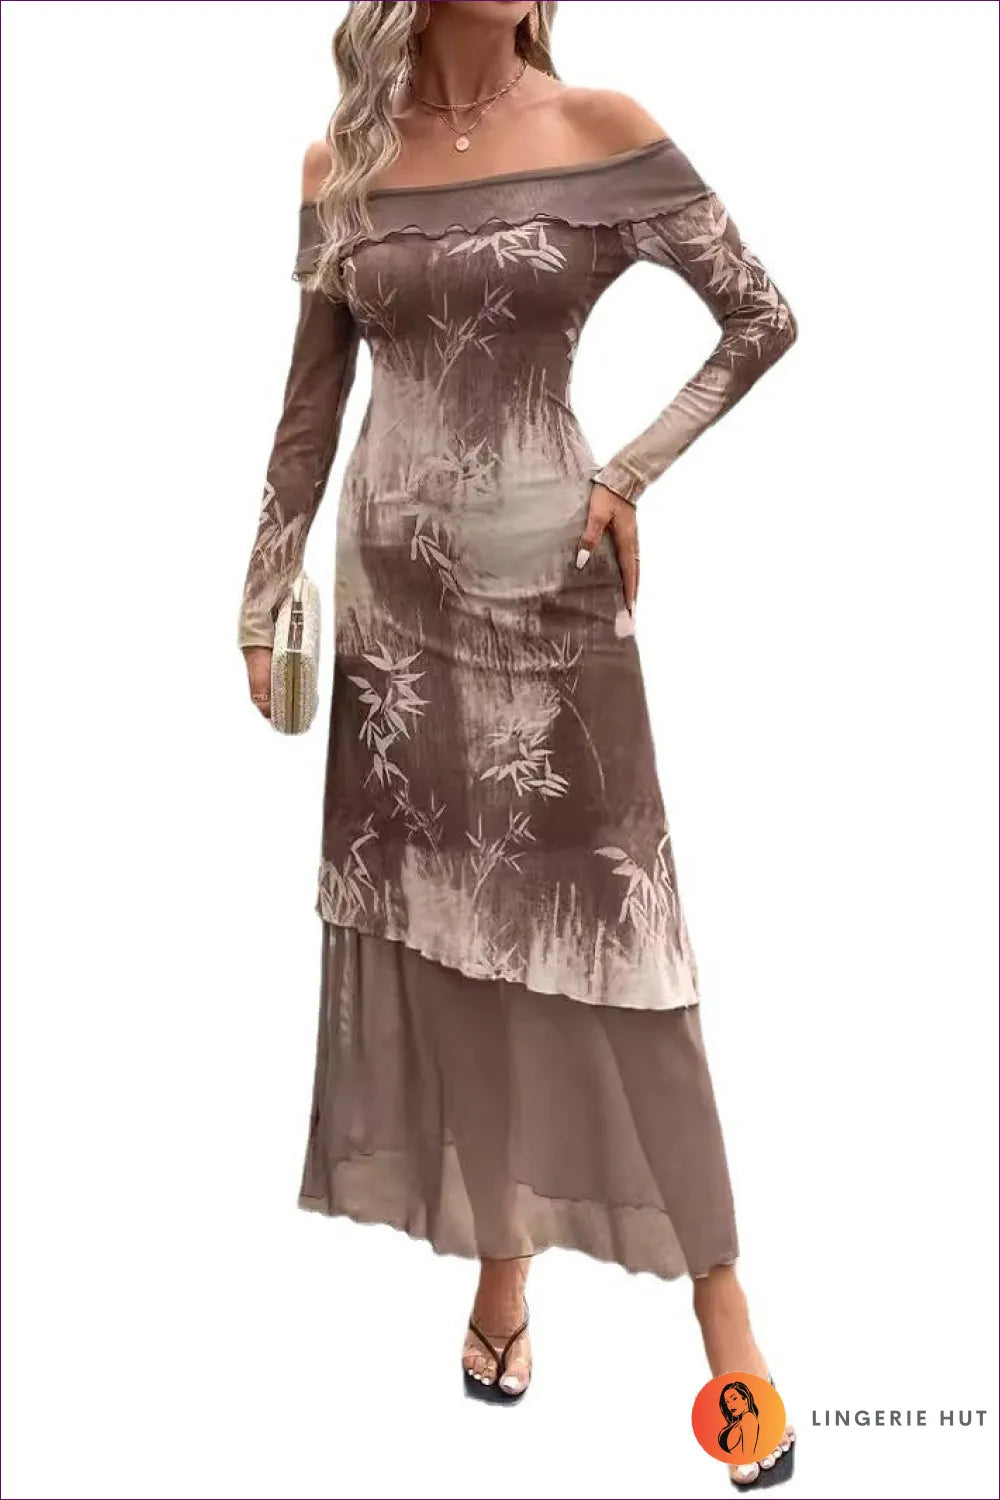 Bamboo Print Mesh Dress - Elegant Style For x